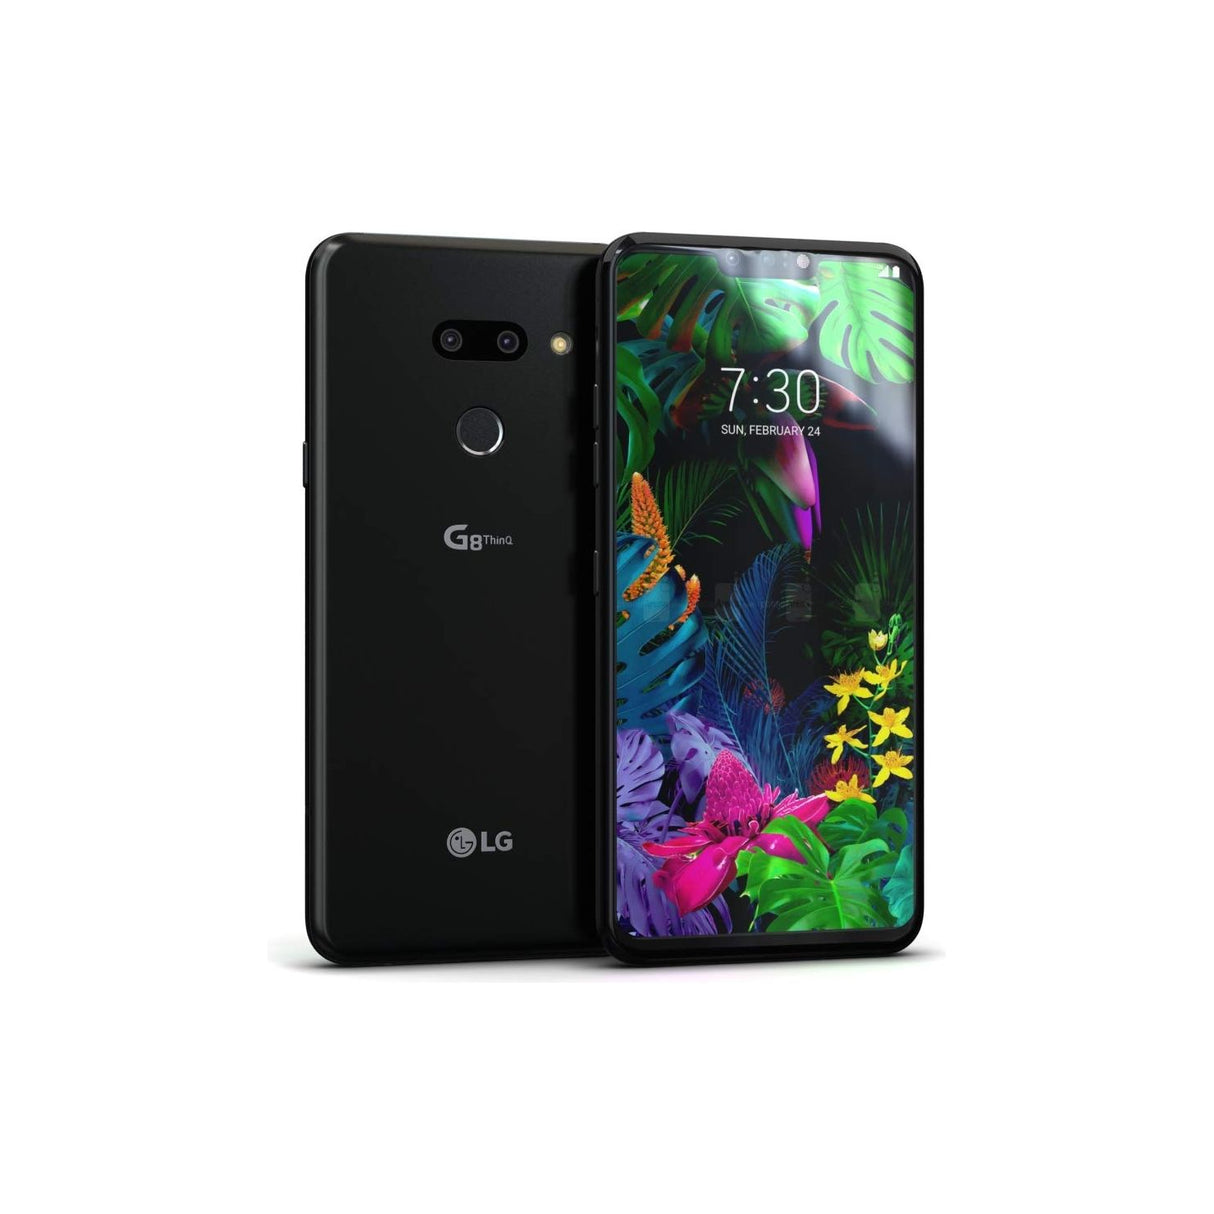 LG G8 ThinQ - 128 GB - Aurora Black - AT&T - GSM